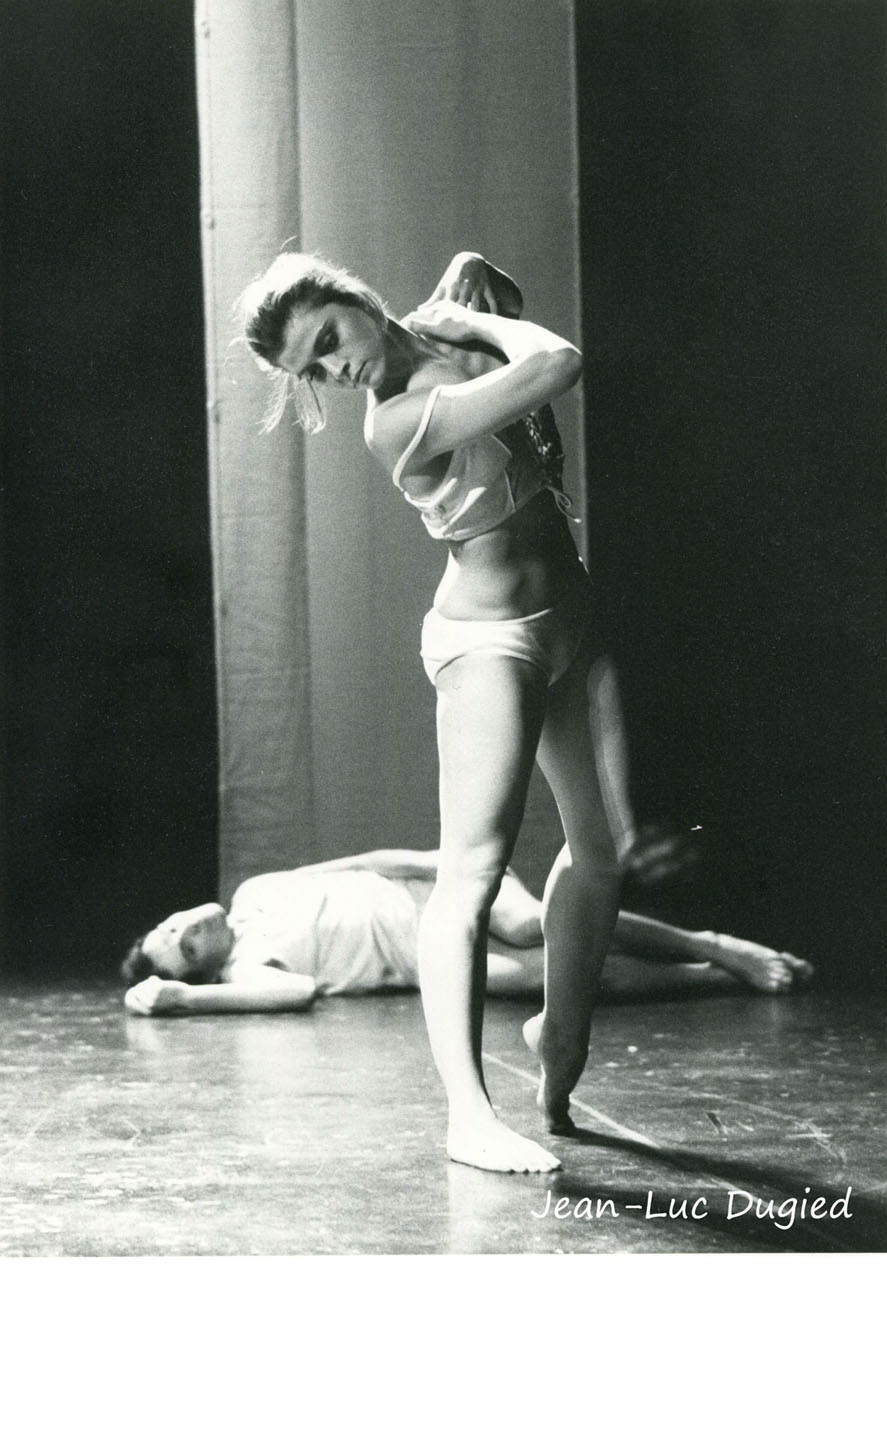 39 Dugied Fabrice - bohème - Bernard Collin et Geneviève Mazin - 1988